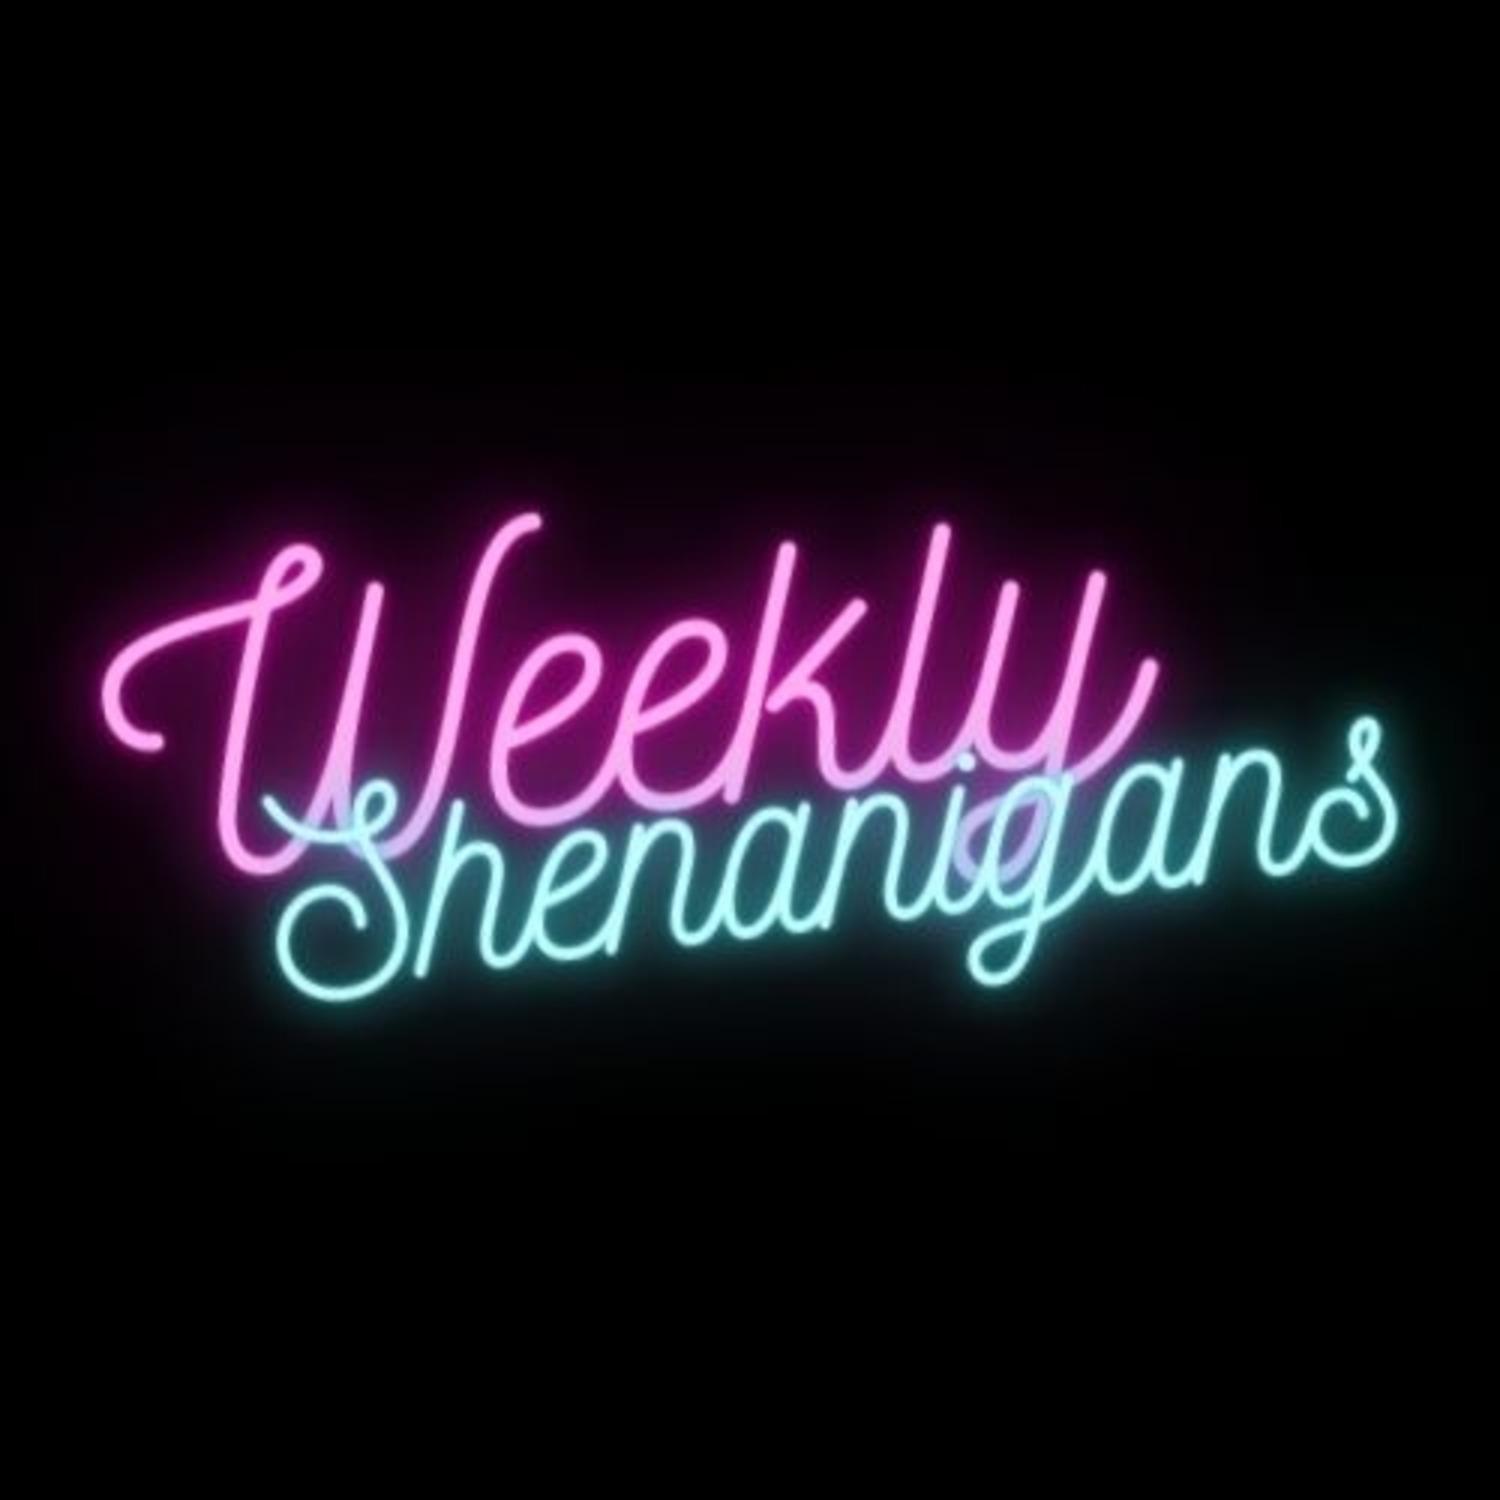 Weekly Shenanigans